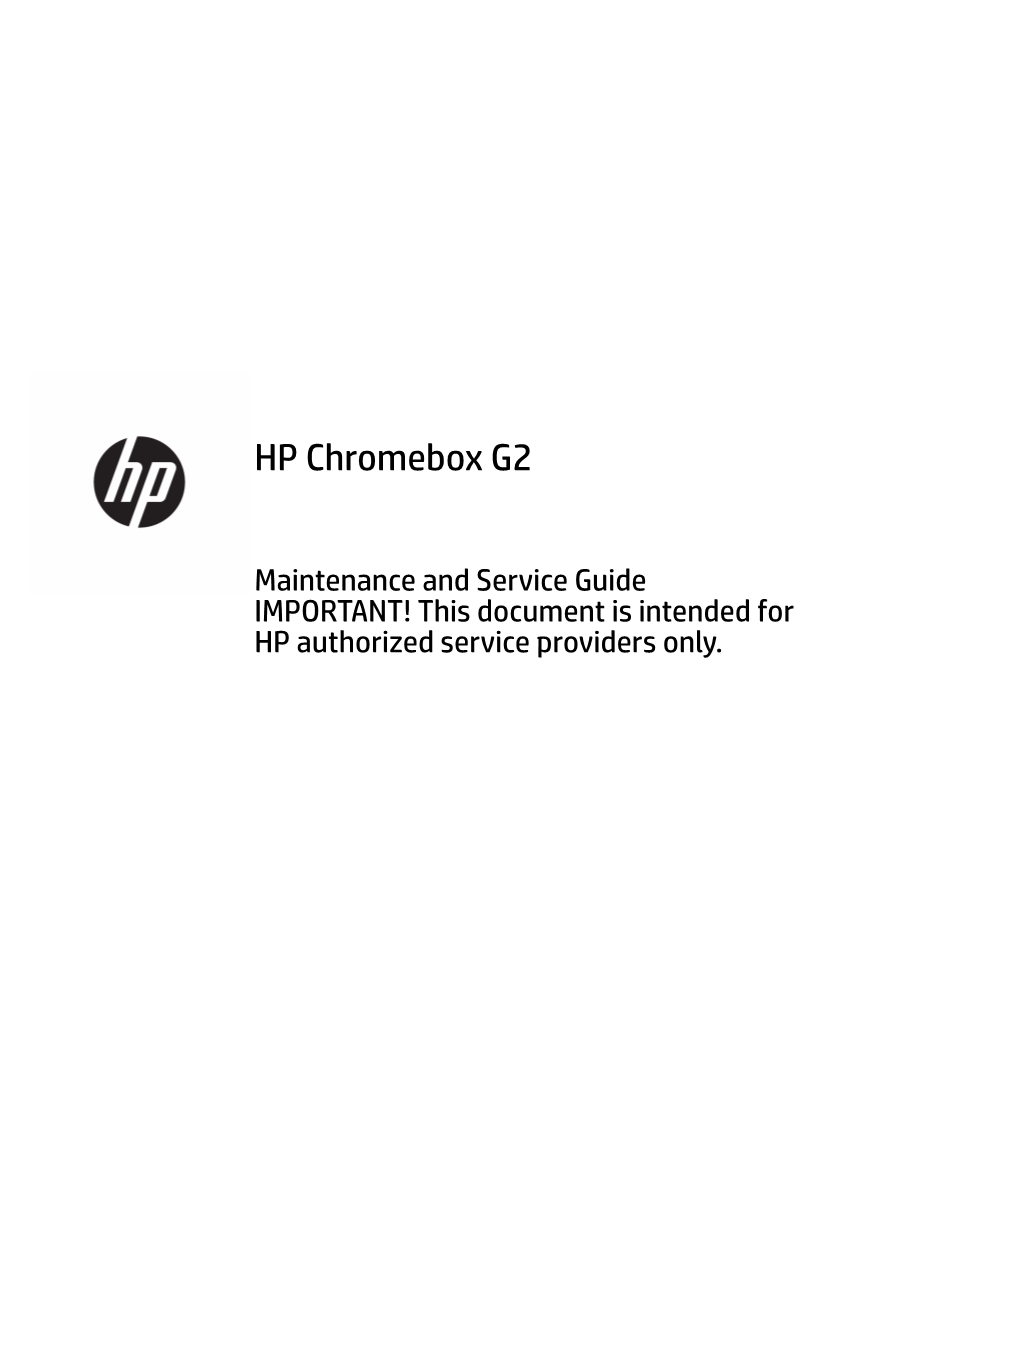 HP Chromebox G2 Maintenance and Service